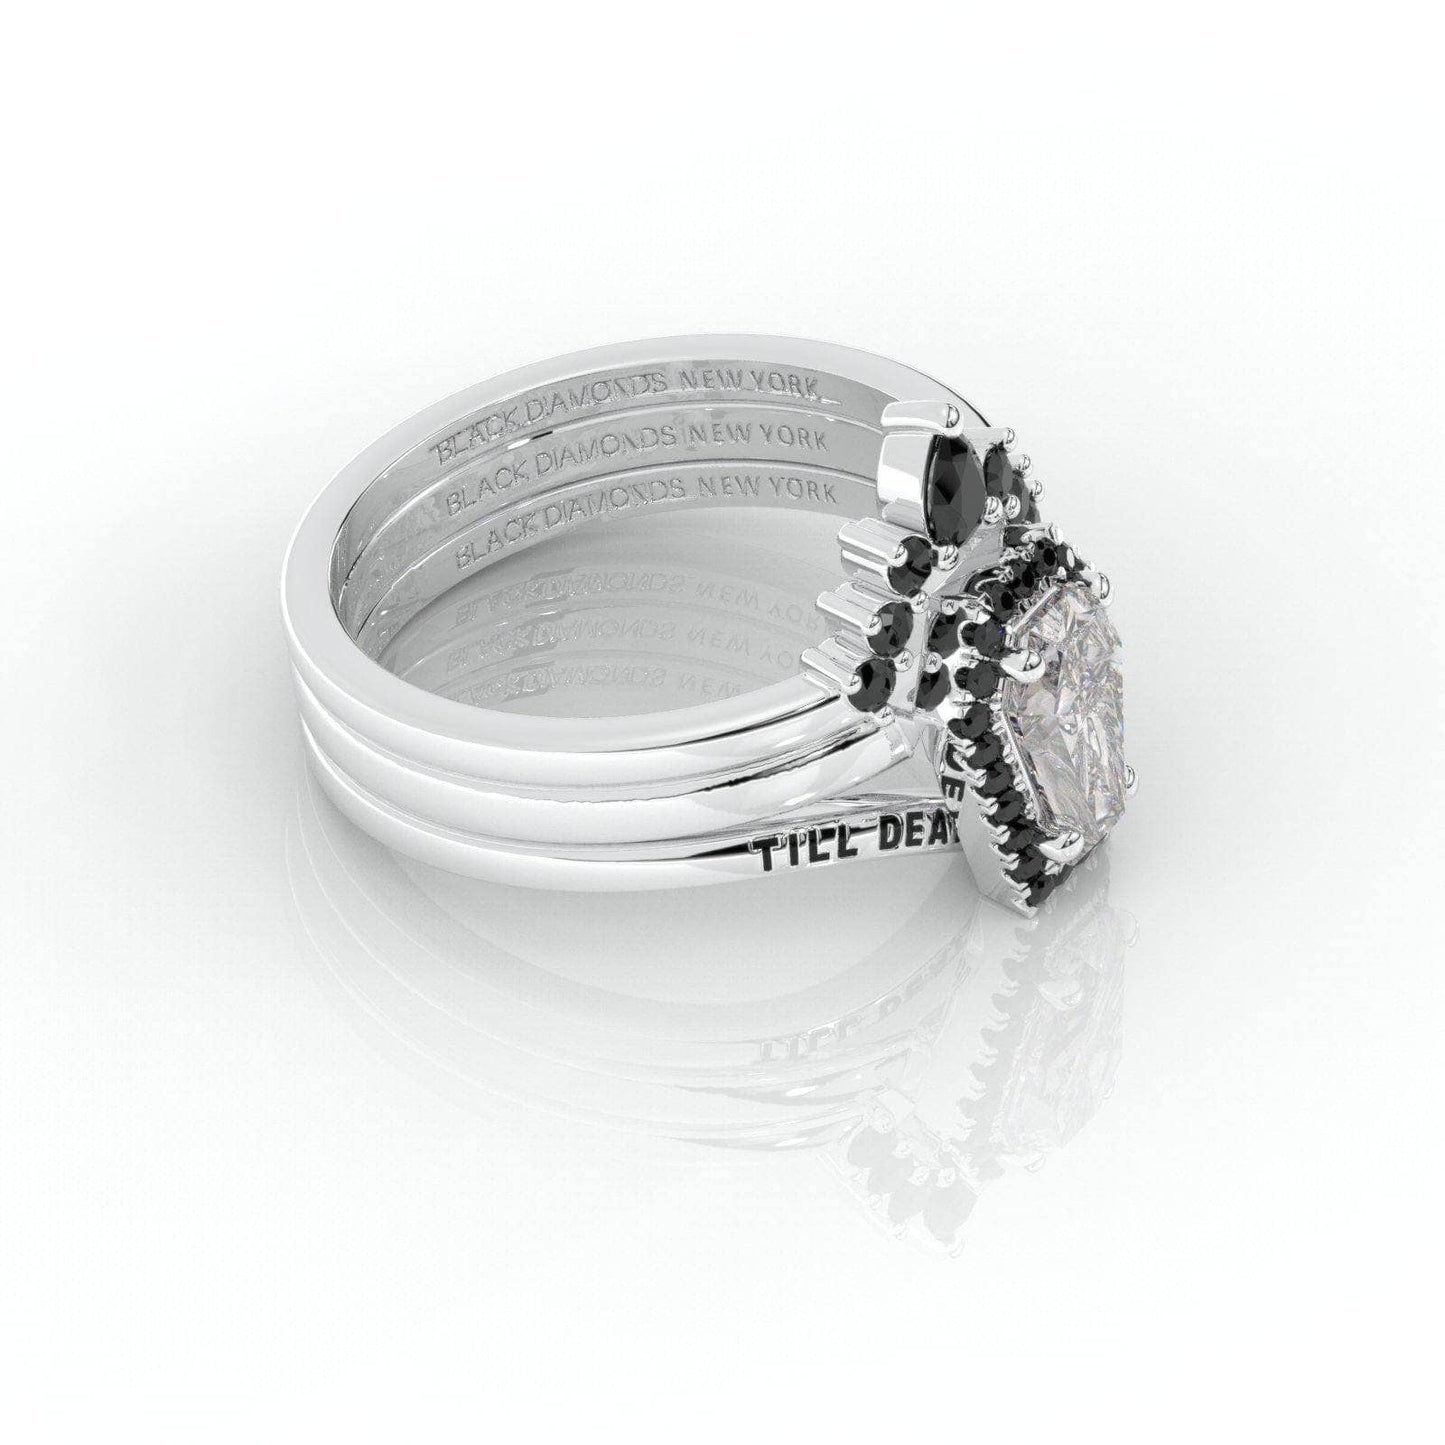 Till Death Do Us Part Rings- Rare Coffin Cut Diamond 14k White Gold Ring Set-Black Diamonds New York